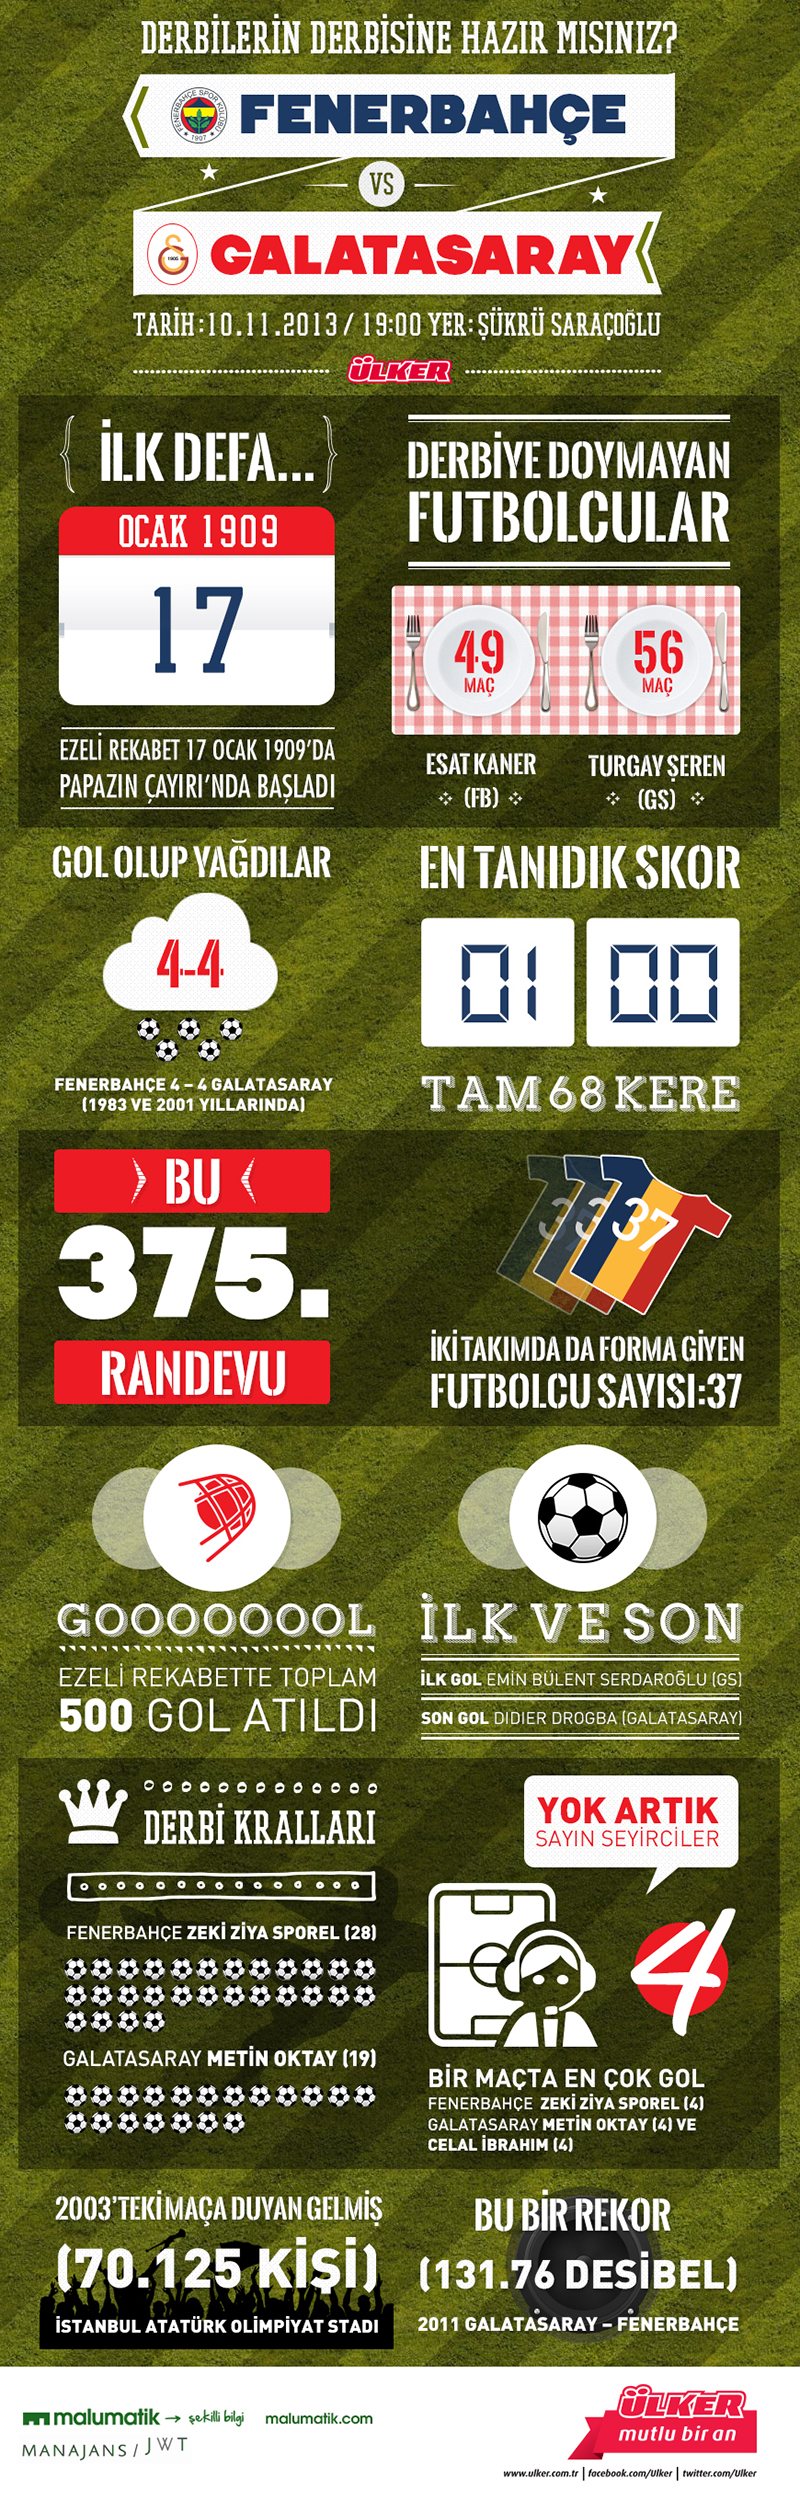 Galatasaray Vs Fenerbahçe İnfografik